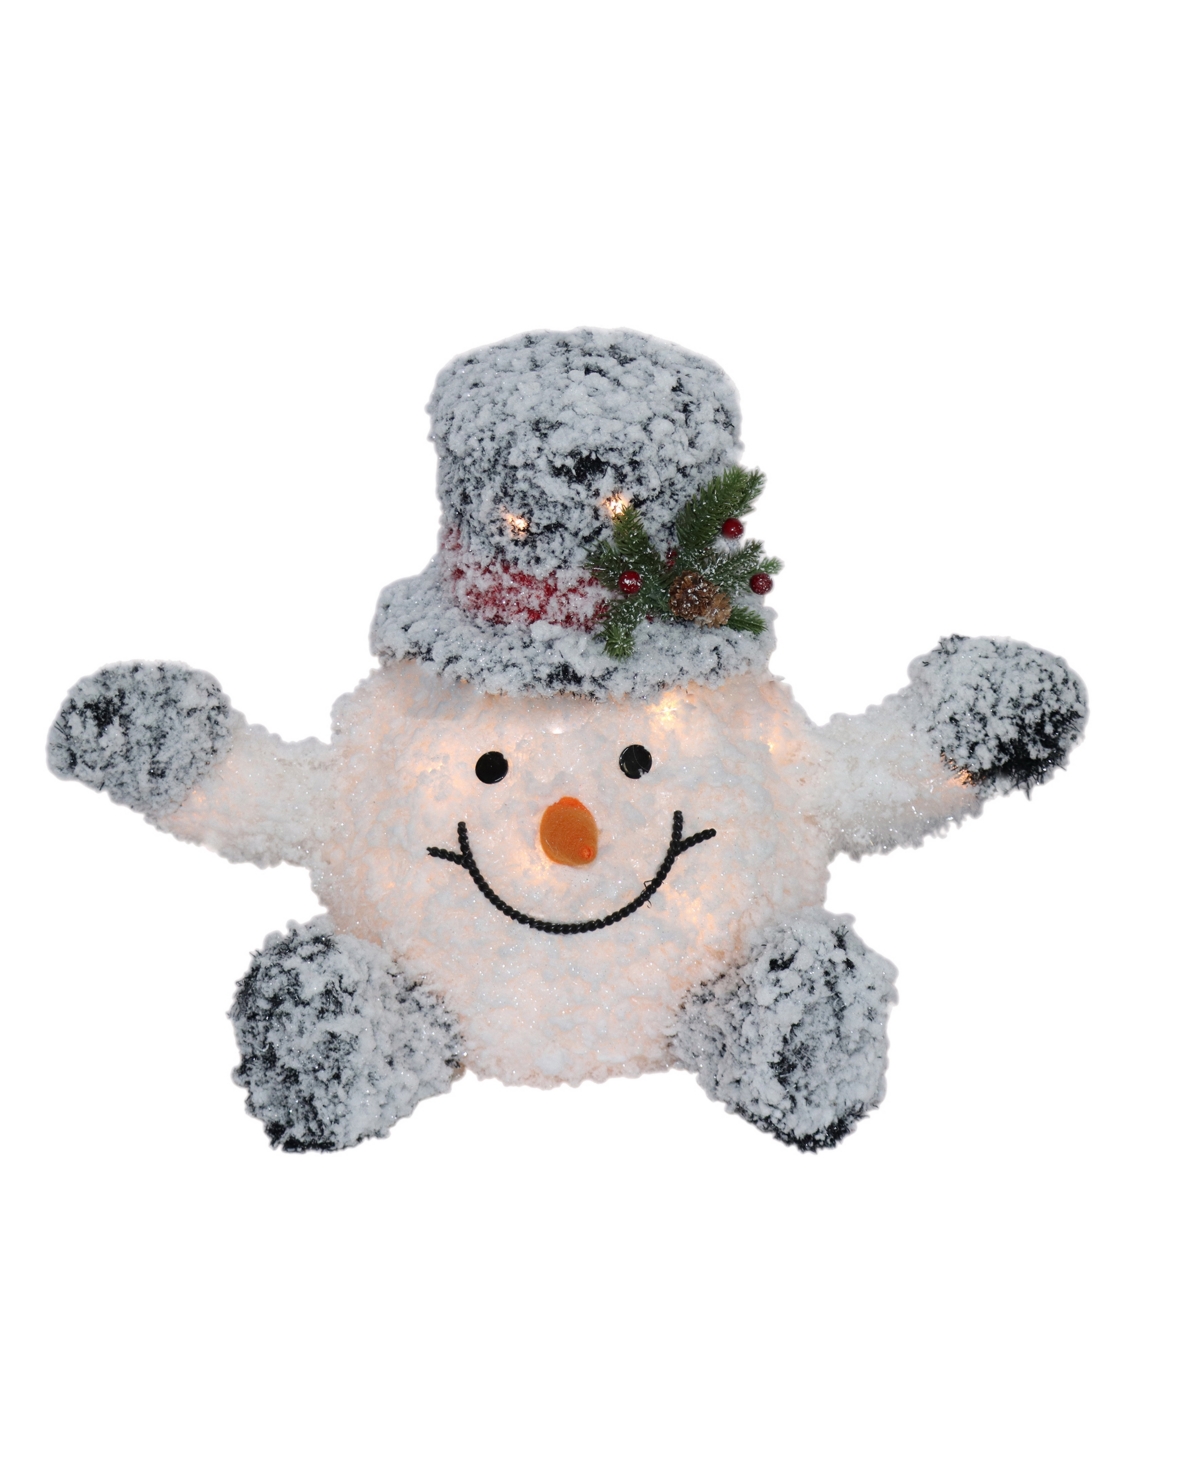 Seasonal Snow Baby With Top Hat Pre-lit In Multi